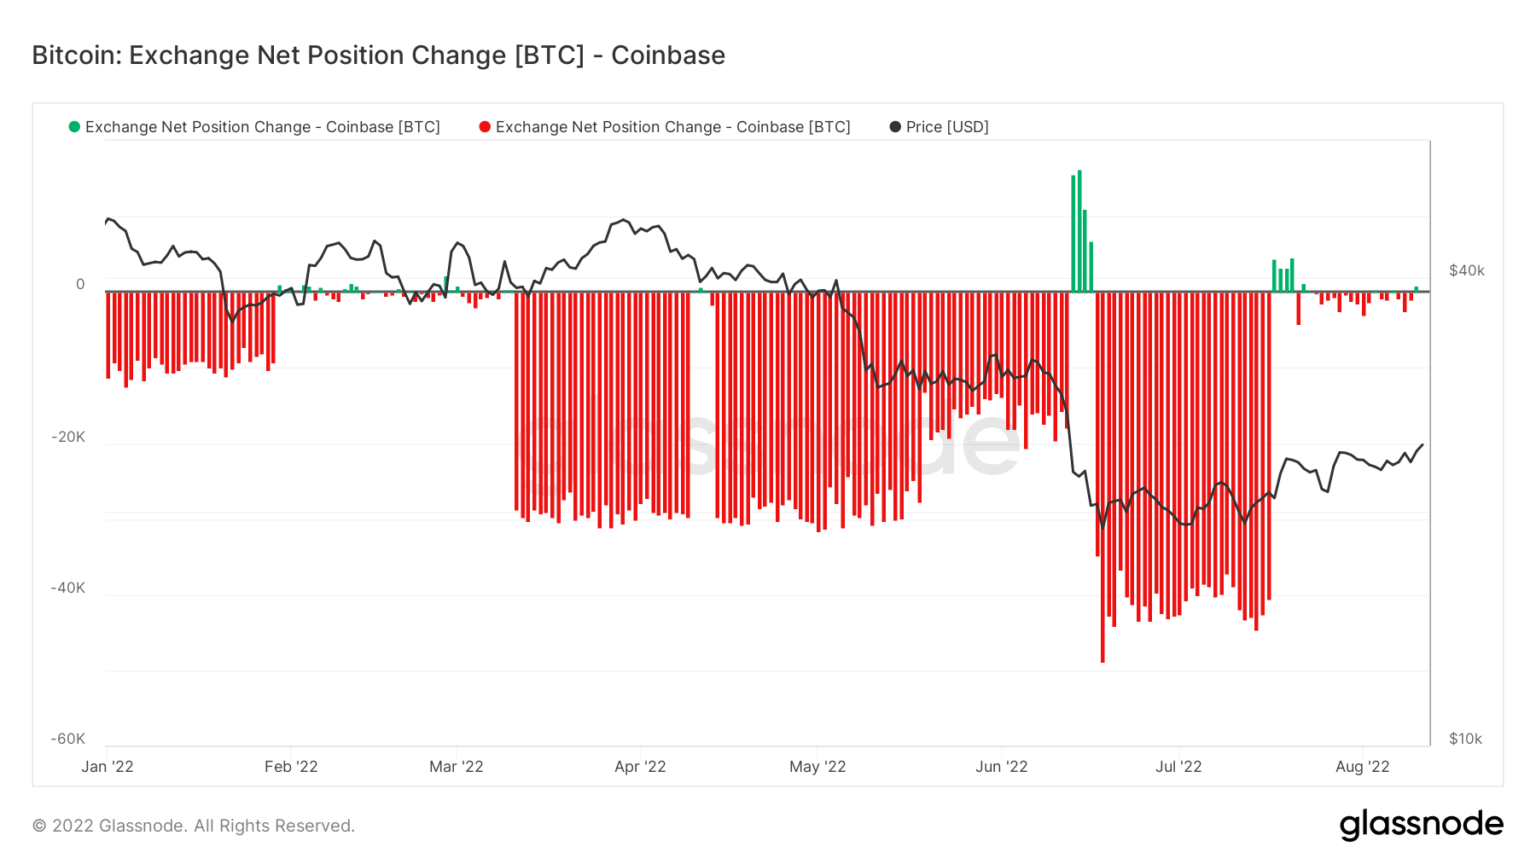 Bitcoin Exchange Net Position Change (Source: Glassnode)